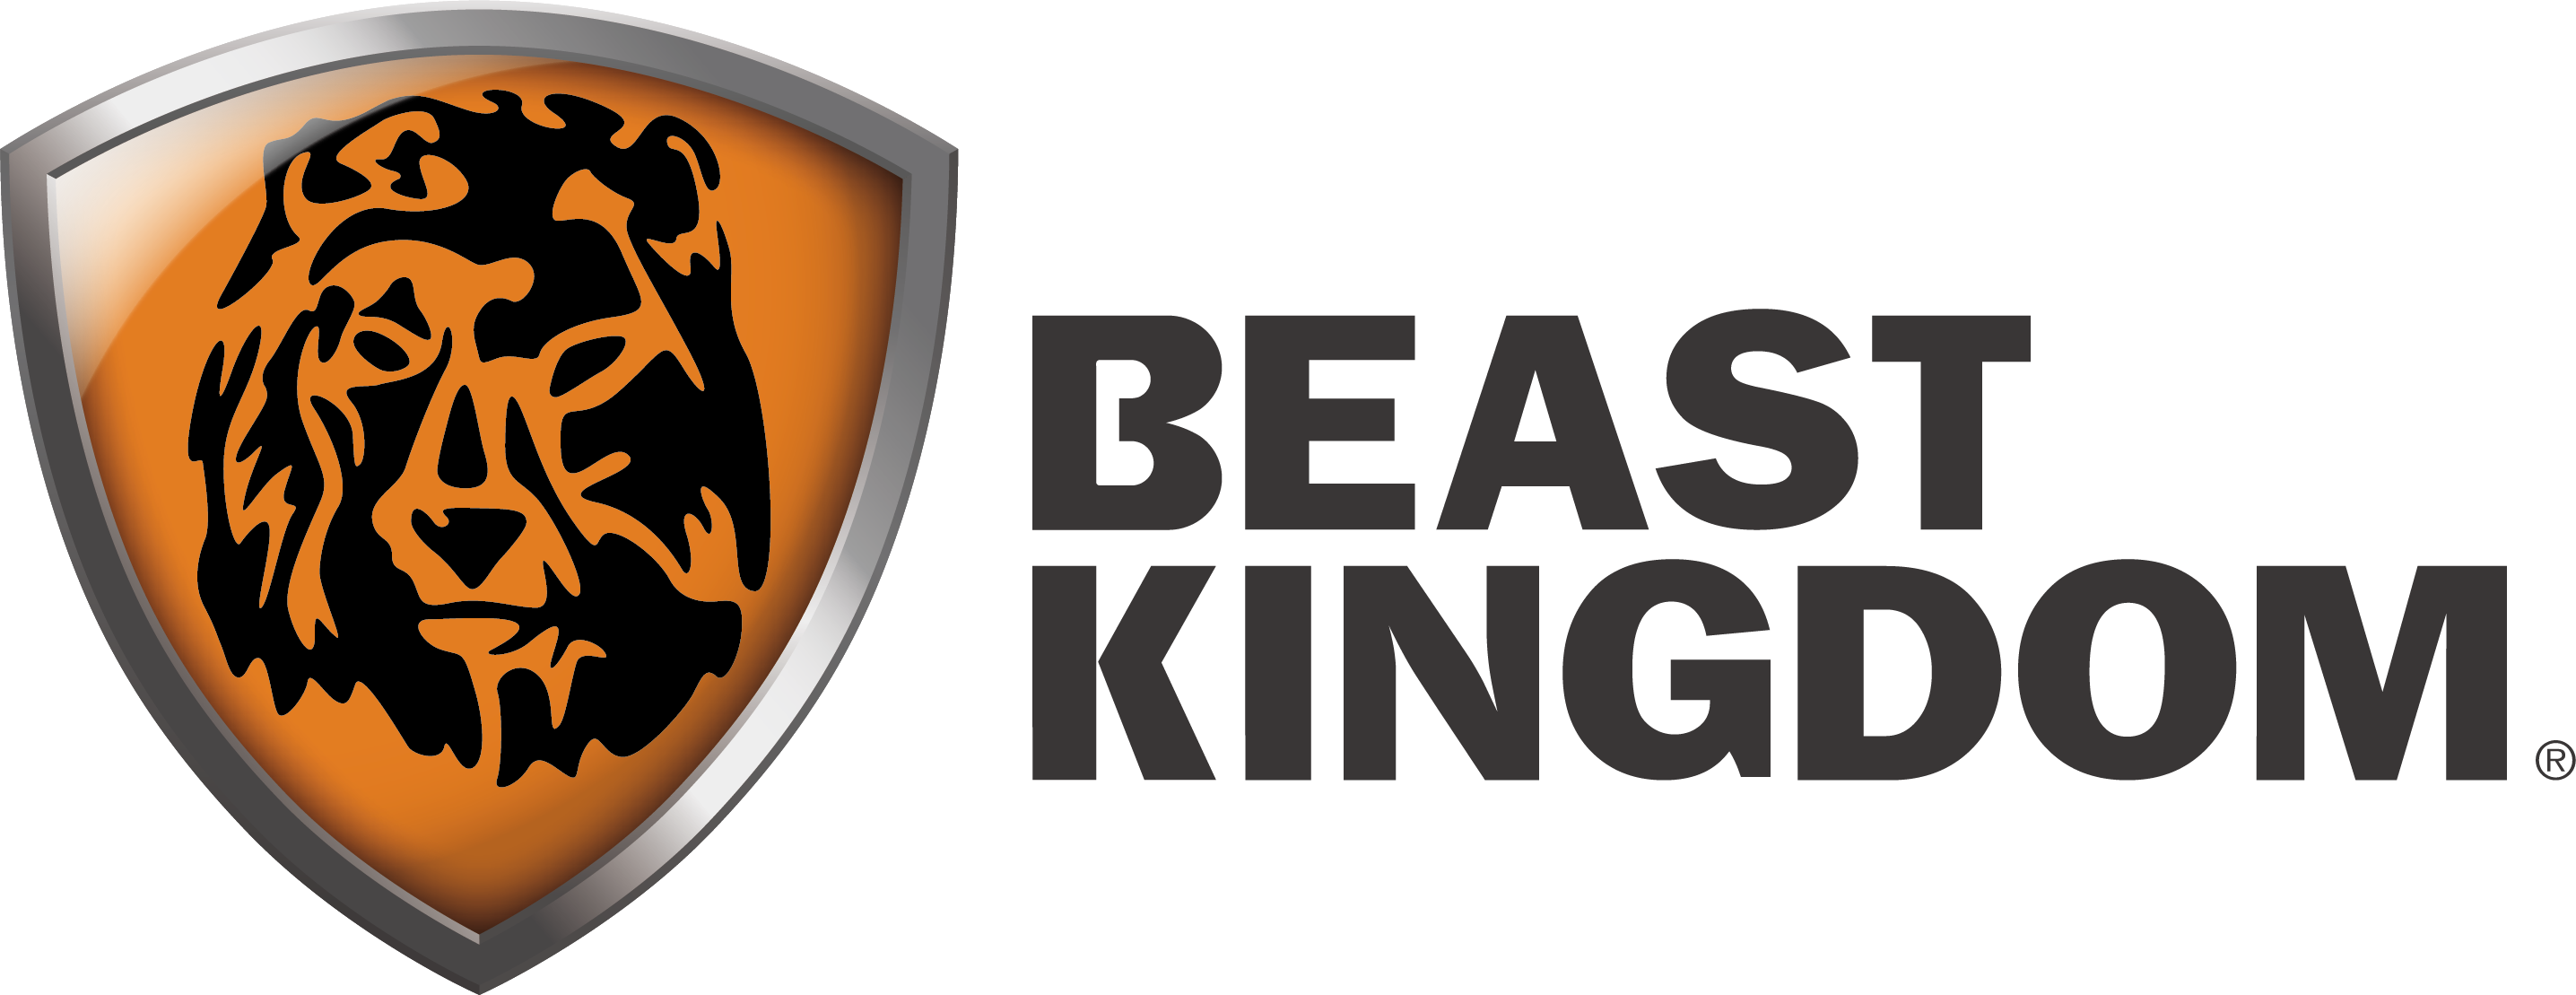 Beast Kingdom